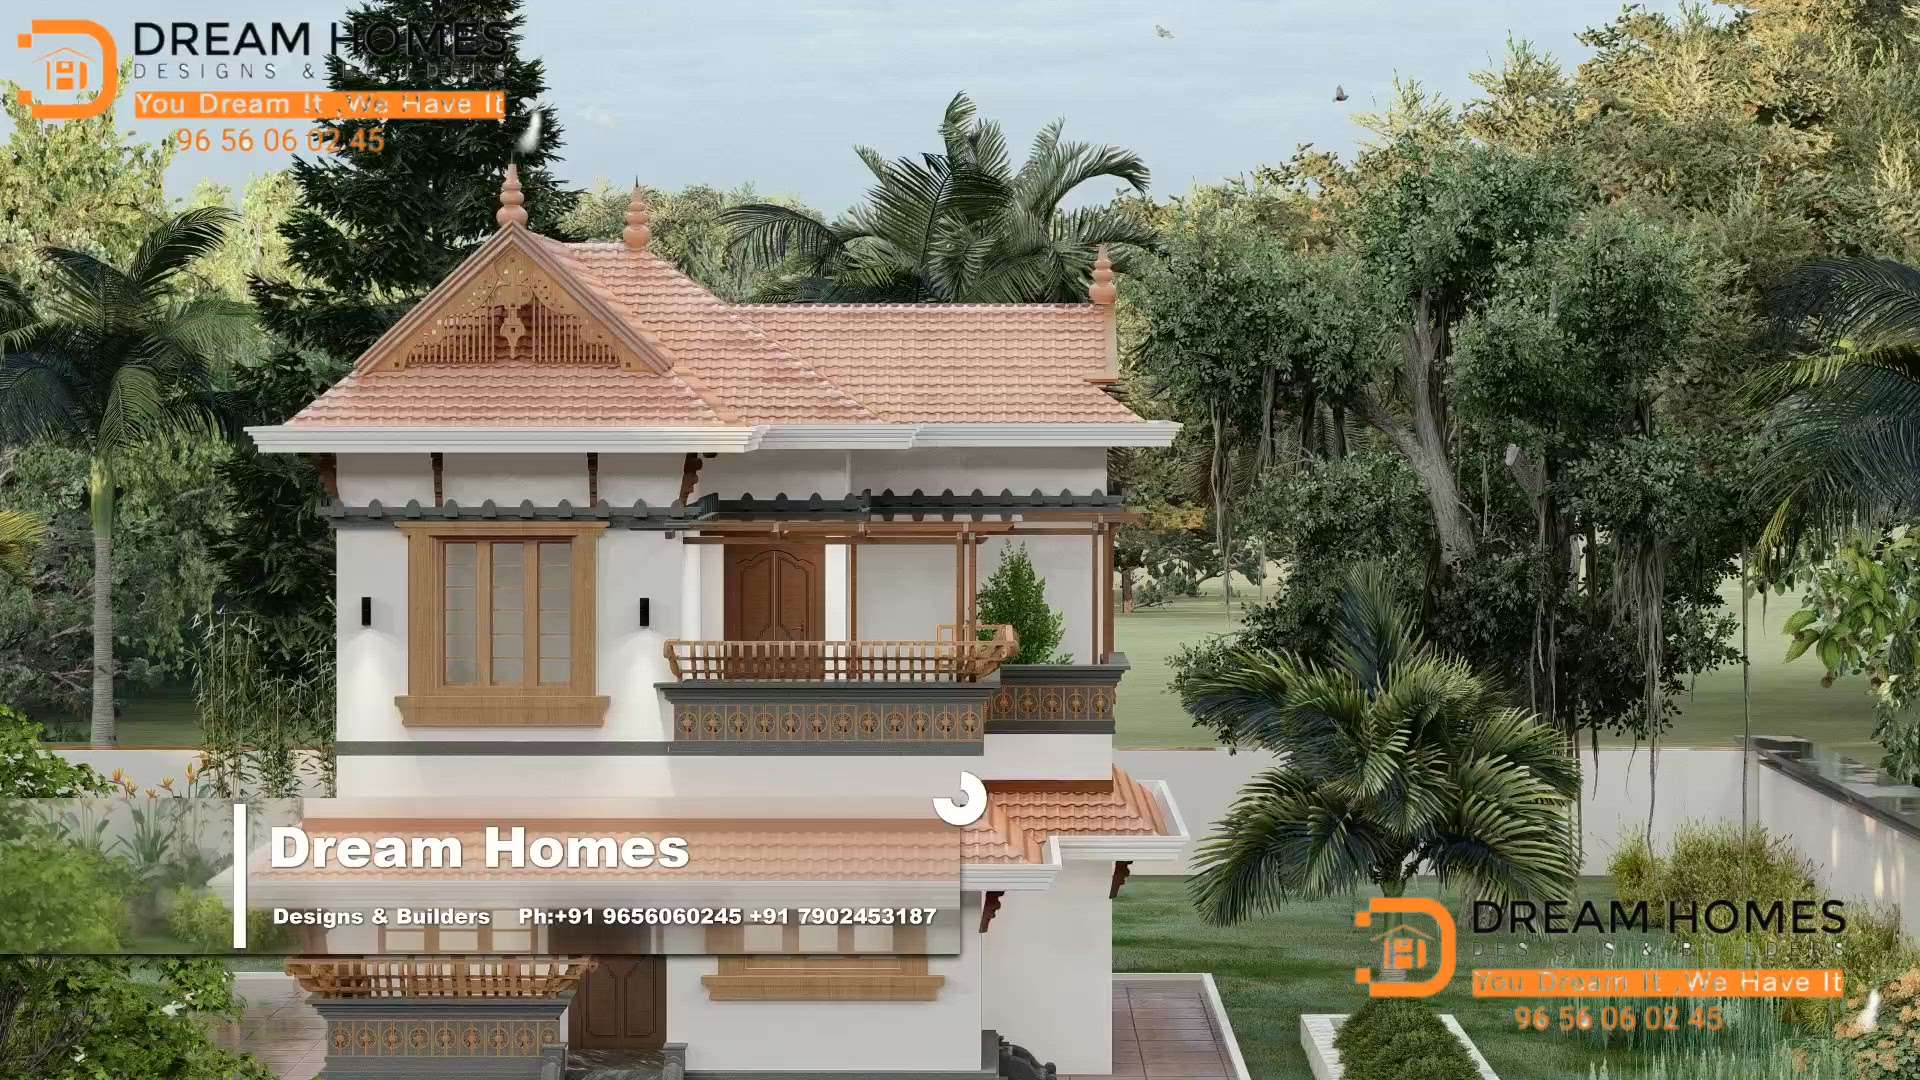 "DREAM HOMES DESIGNS & BUILDERS "
            You Dream It, We Have It'

       "Kerala's No 1 Architect for Traditional Homes"

"1100 സ്‌ക്വയർ ഫീറ്റിൽ രണ്ടുനിലയിൽ സിറ്റ്ഔട്ട്‌, ലിവിങ്,,3 ബെഡ്‌റൂംസ് അറ്റാച്ഡ്,ഡൈനിങ്ങ്, കിച്ചൻ,സ്റ്റെയർറൂം ഹാൾ എന്നിവയടങ്ങുന്ന സുന്ദരമായ ഇ കൊച്ചുവീന് കോസ്റ്റ് വരുന്നത് 28,60,000 രൂപ ഇന്റീയർ സഹിതം ബ്രാന്റ്ഡ് മീറ്റിരിയൽസ് ഉപയോഗിച്ച് കേരളത്തിൽ എവിടെയും ഇ ഡിസൈനിൽ 👇"

(🏵️🎉നമ്മൾക്ക് ഒരു ലക്ഷ്യമുണ്ടാക്കിയതുകൊണ്ടോ, അല്ലെങ്കിൽ കുറെ സ്വപ്‌നങ്ങൾ കണ്ടത് കൊണ്ടോ മാത്രം ഒന്നുമാവില്ലല്ലോ...... അതിലേക്കെത്താൻ പരിശ്രമിക്കുക എന്നതാണ്   
🏵️️അതിനായി നമ്മൾ നമ്മളെത്തന്നെ മനസിലാക്കുകയും, പ്രചോദിപ്പിക്കുകയും, പ്രശംസിക്കുകയും ചെയ്യുക....... )
🏵️ശുഭരാത്രി 💞

"A beautiful traditional structure  will be completed only with the presence of a good Architect and pure Vasthu Sastra.

Dream Homes will always be there whenever we are needed.

We are providing service to all over India 
No Compromise on Quality, Sincerity & Efficiency.

#traditionalhome #traditional

For more info

9656